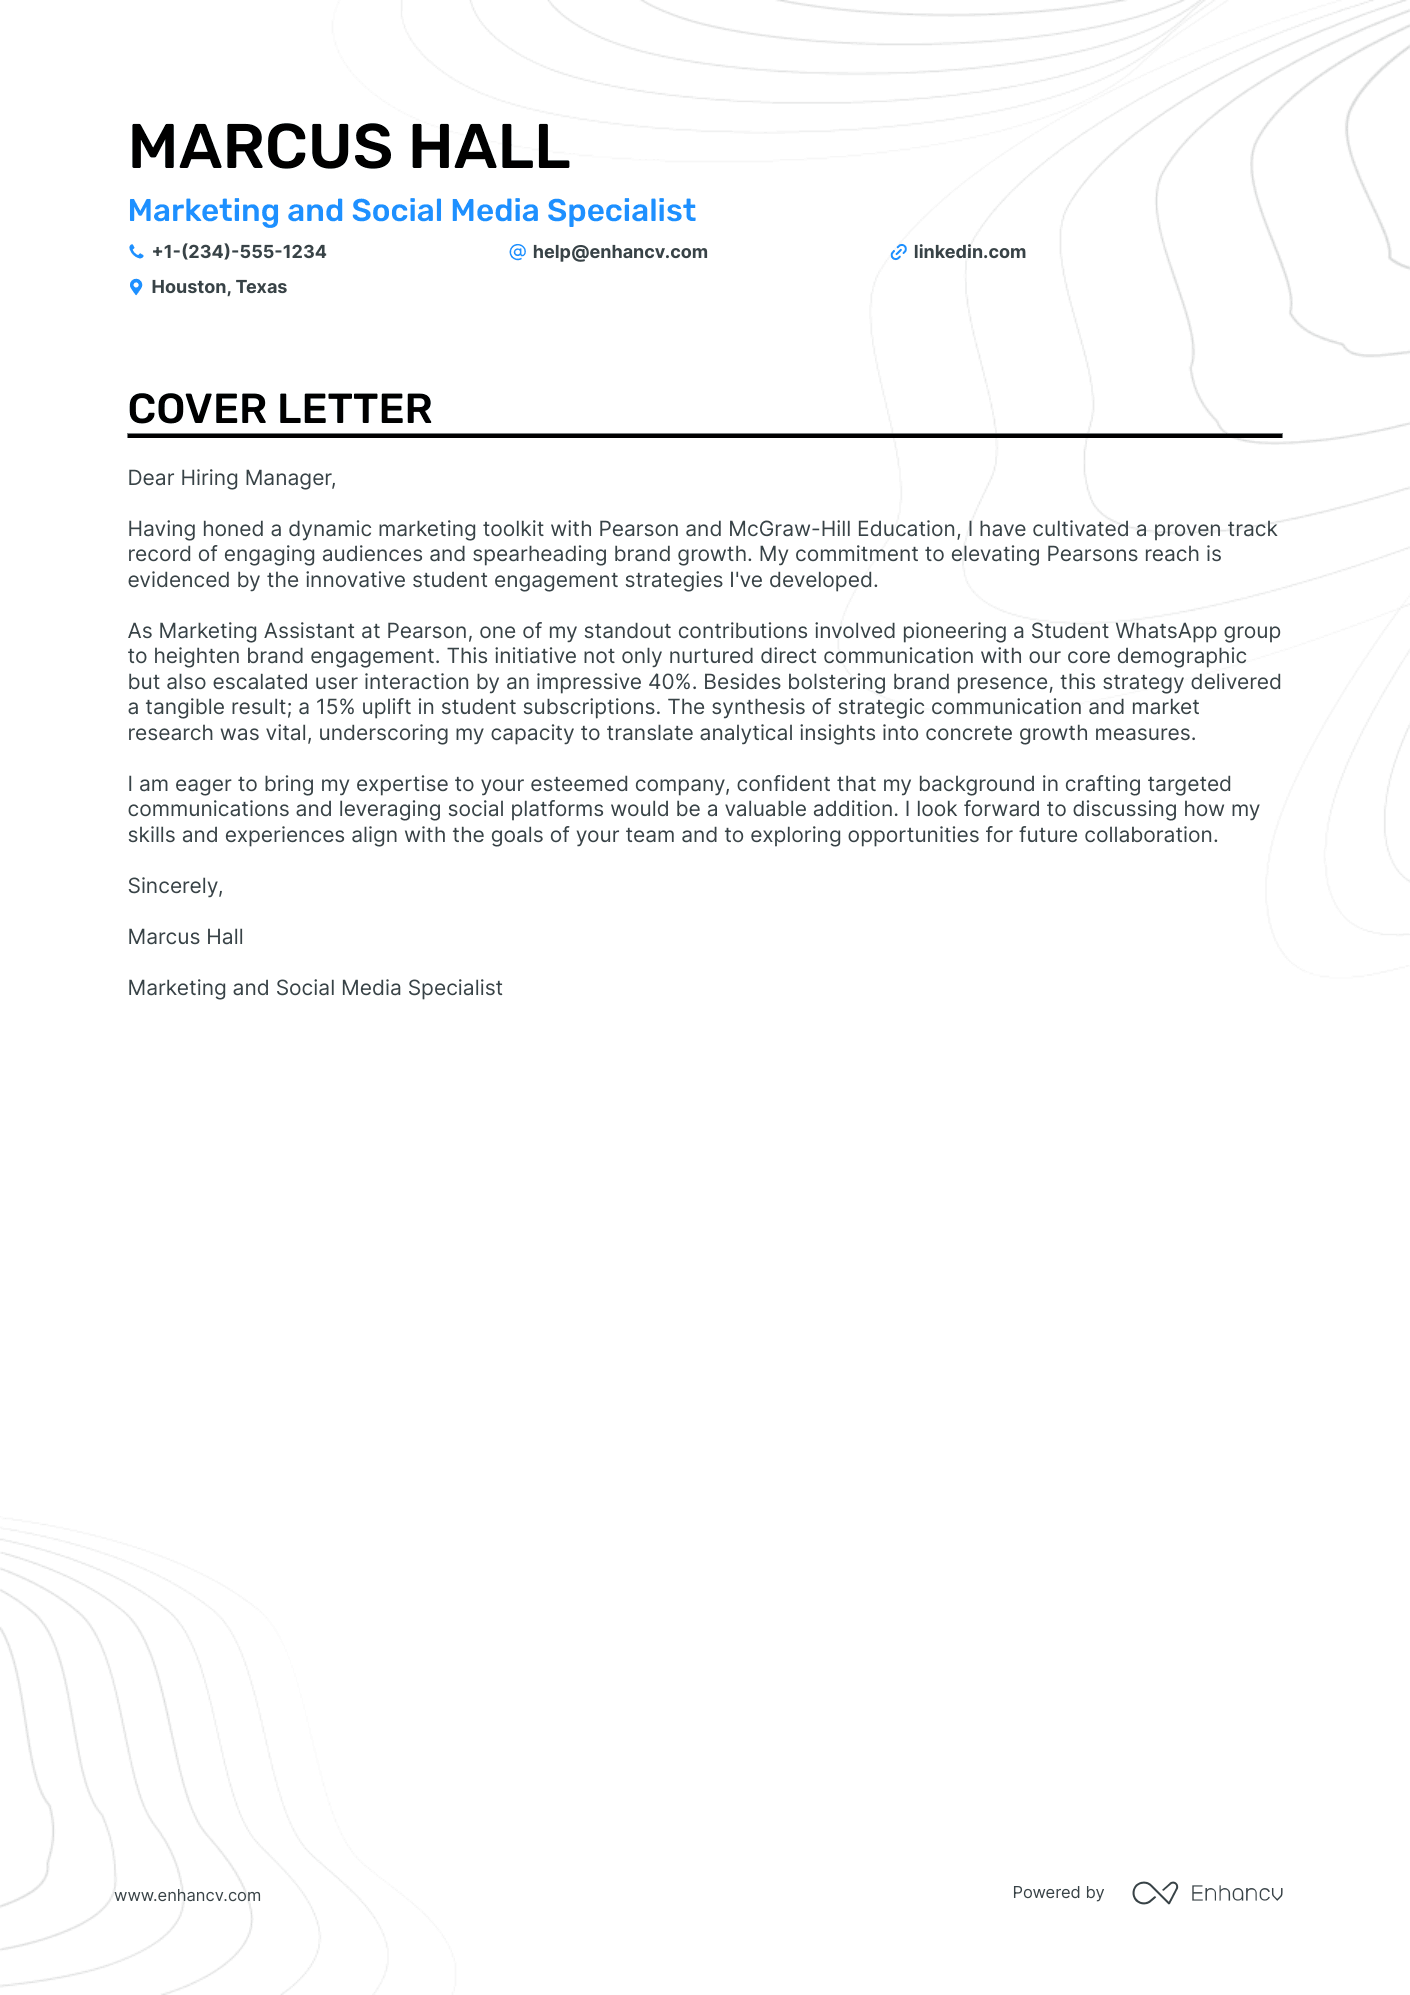 Student Ambassador cover letter